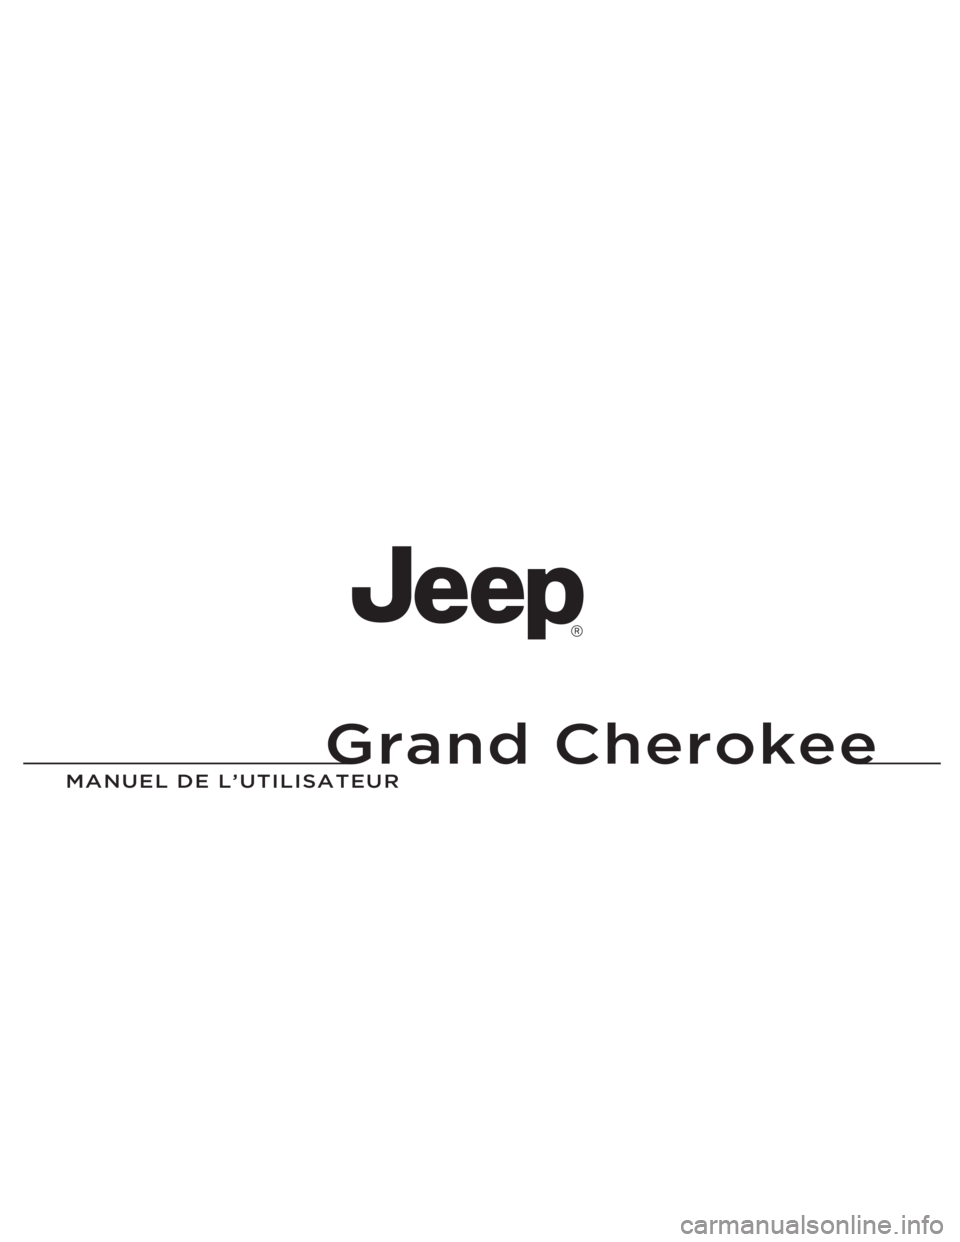 JEEP GRAND CHEROKEE 2014  Notice dentretien (in French) Grand Cherokee
MANUEL DE L’U\fILISA\f\’EUR
Grand Cherokee
14WK741-126-FRE-AAImprimé en Europe 14 